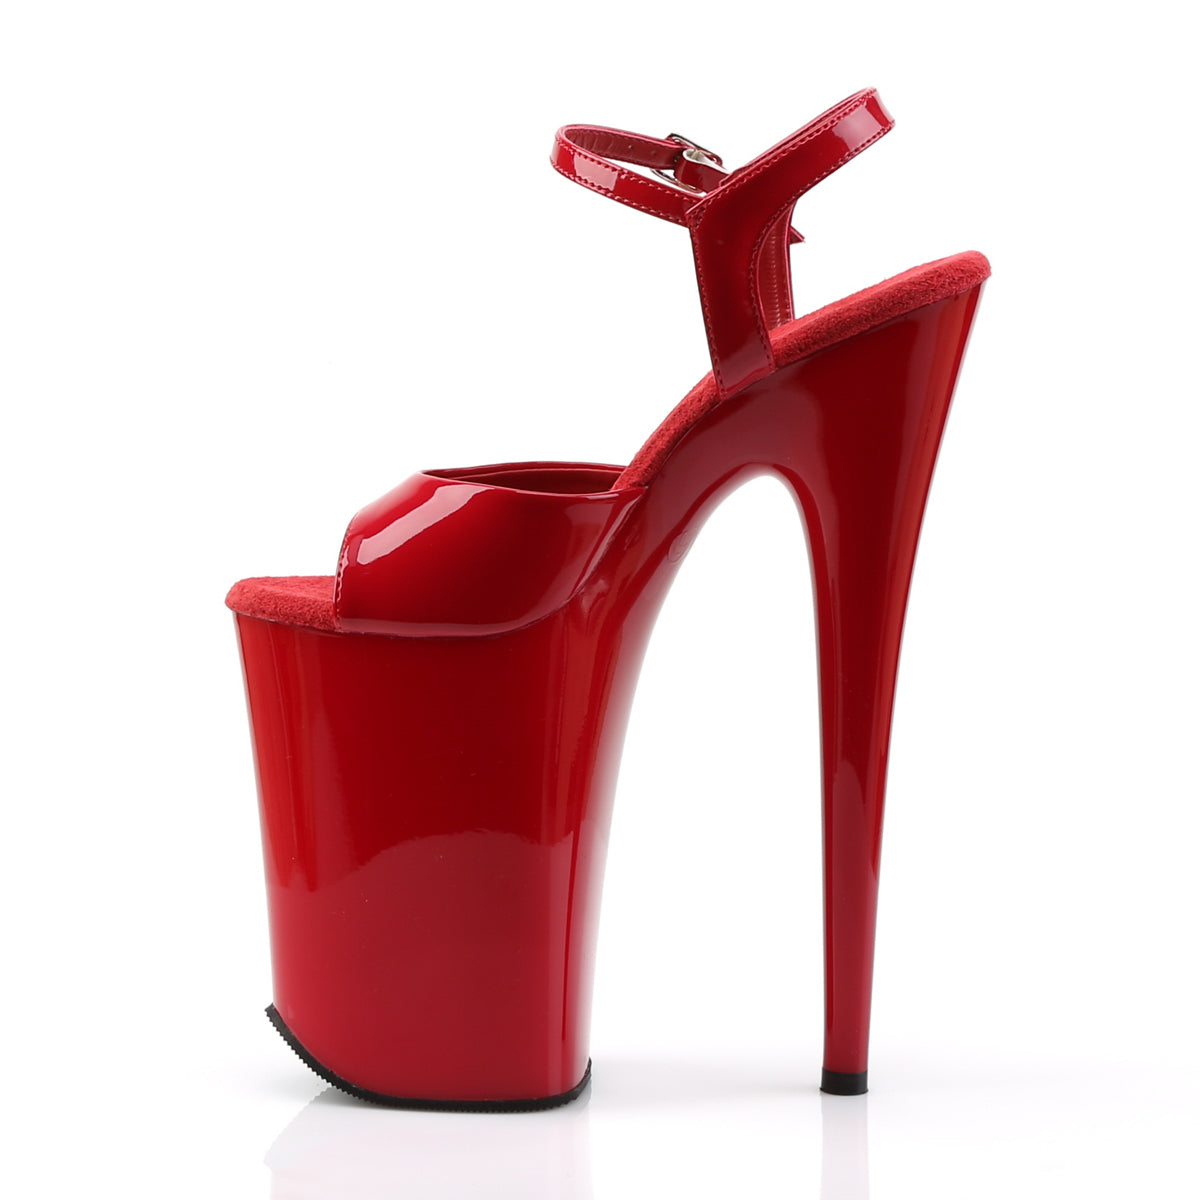 INFINITY-909 Pleaser 9 Inch Heel Red Pole Dancing Platforms-Pleaser- Sexy Shoes Pole Dance Heels